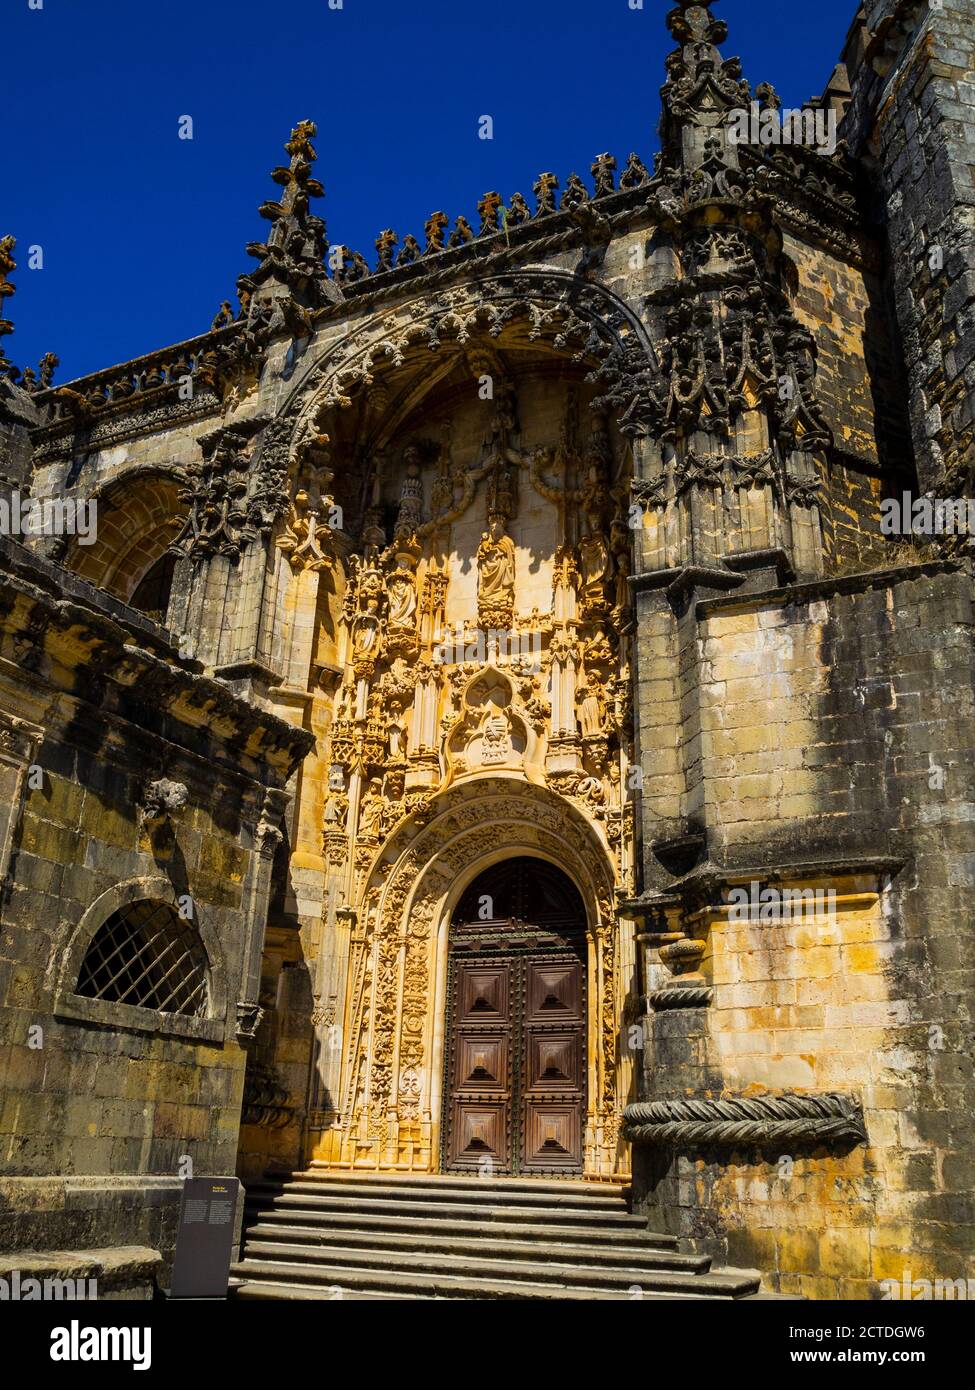 La entrada de la iglesia del convento en estilo manuelino, Convento de Cristo, Patrimonio de la UNESCO, Tomar, Santarem, Portugal, Europa Foto de stock